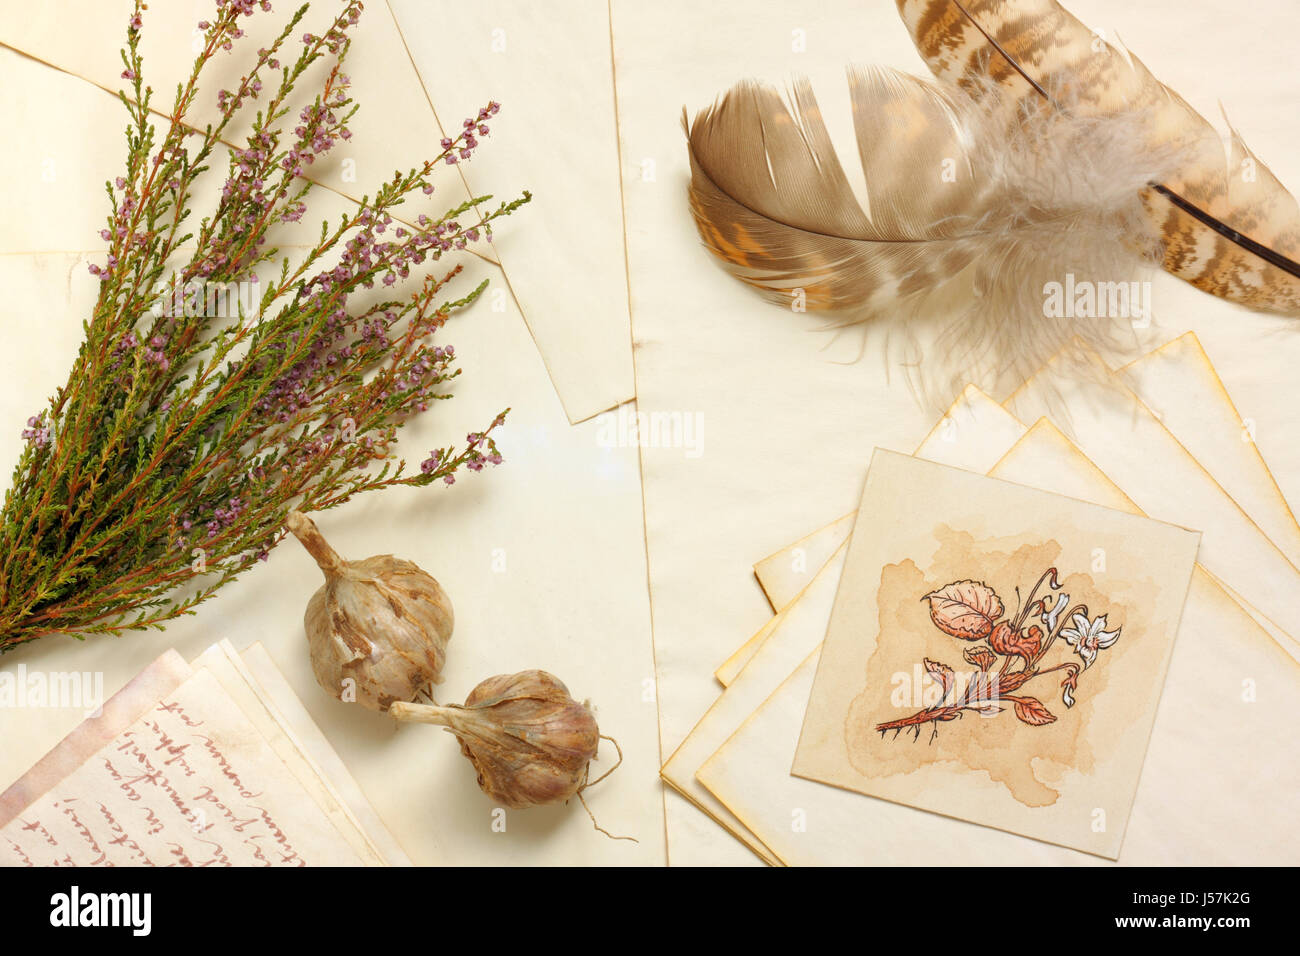 Still life nostálgico con ajo, dibujo botánico, montón de brezo secos y plumas sobre hojas de papel envejecido Foto de stock